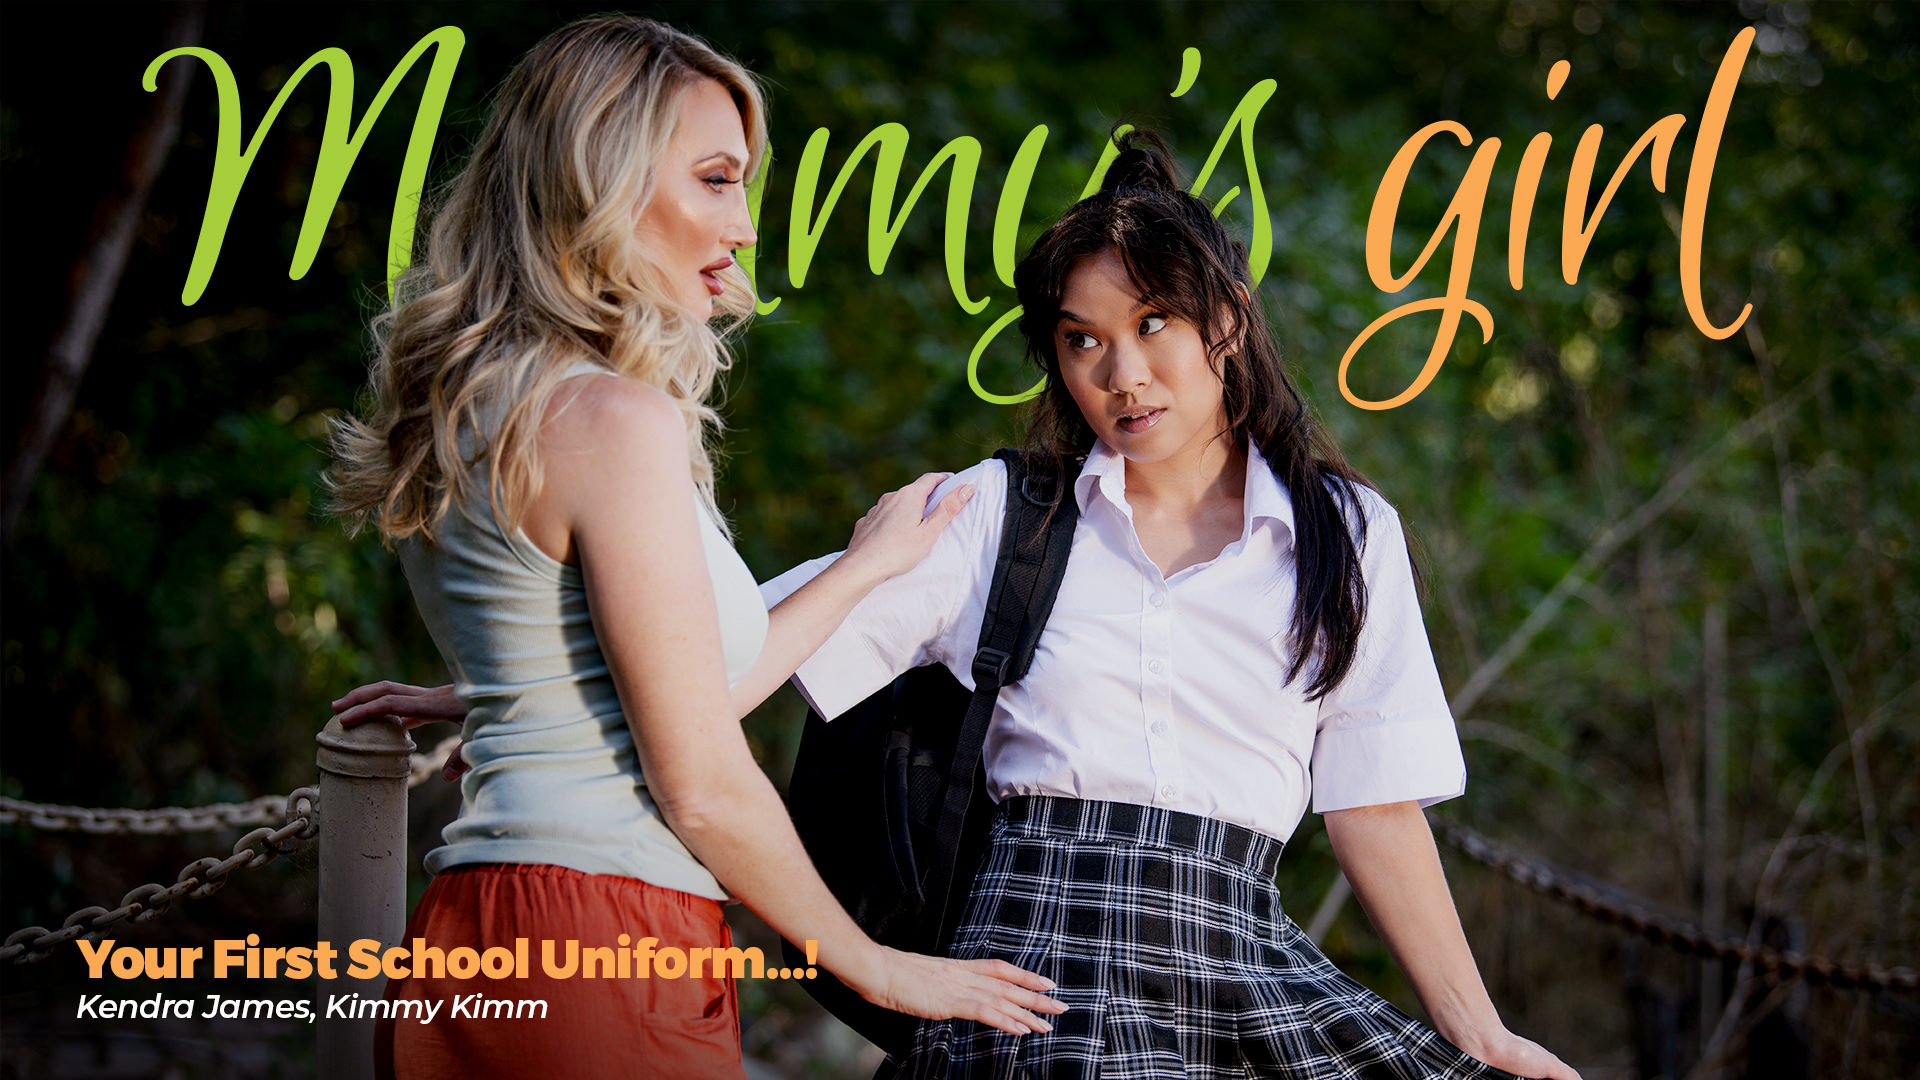 Kendra James, Kimmy Kimm Your First School Uniform...! MommysGirl